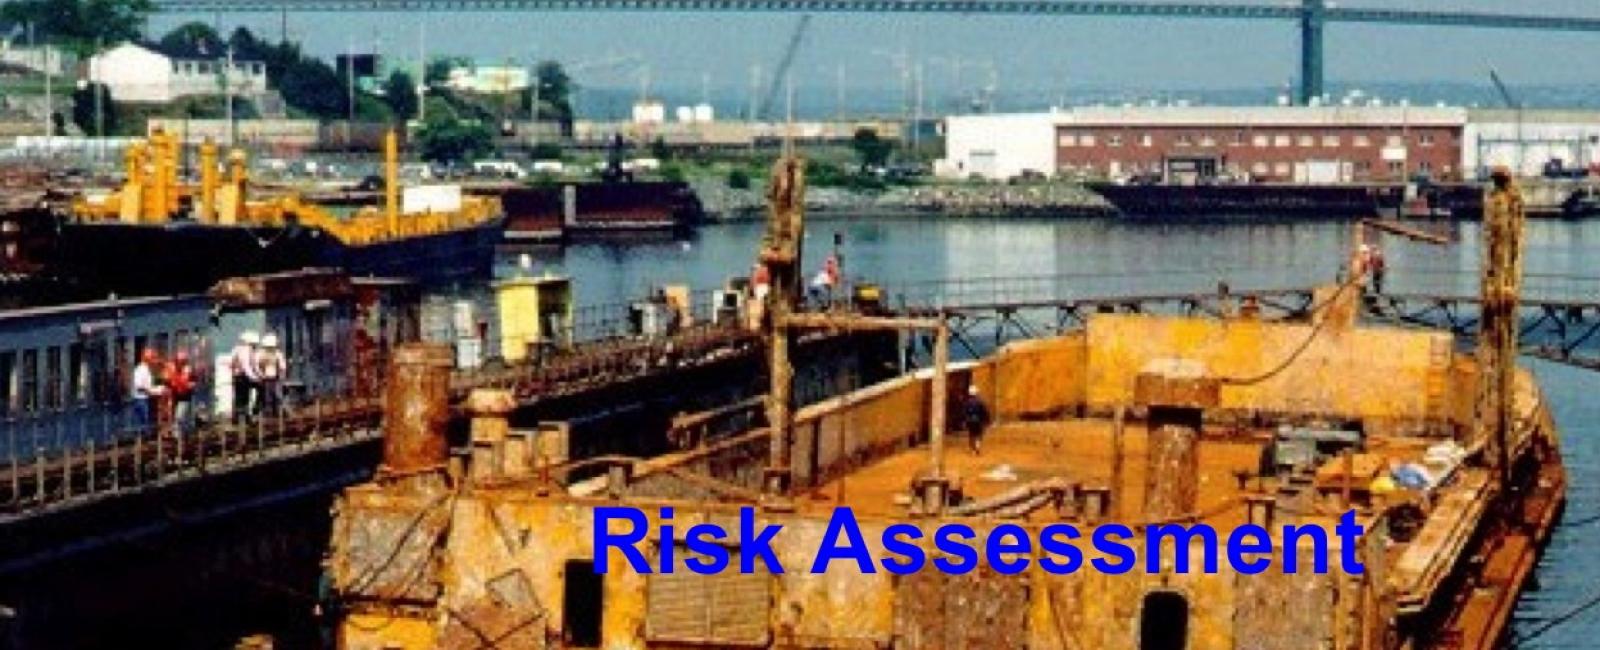 Risk Assessment Irving Whale Barge